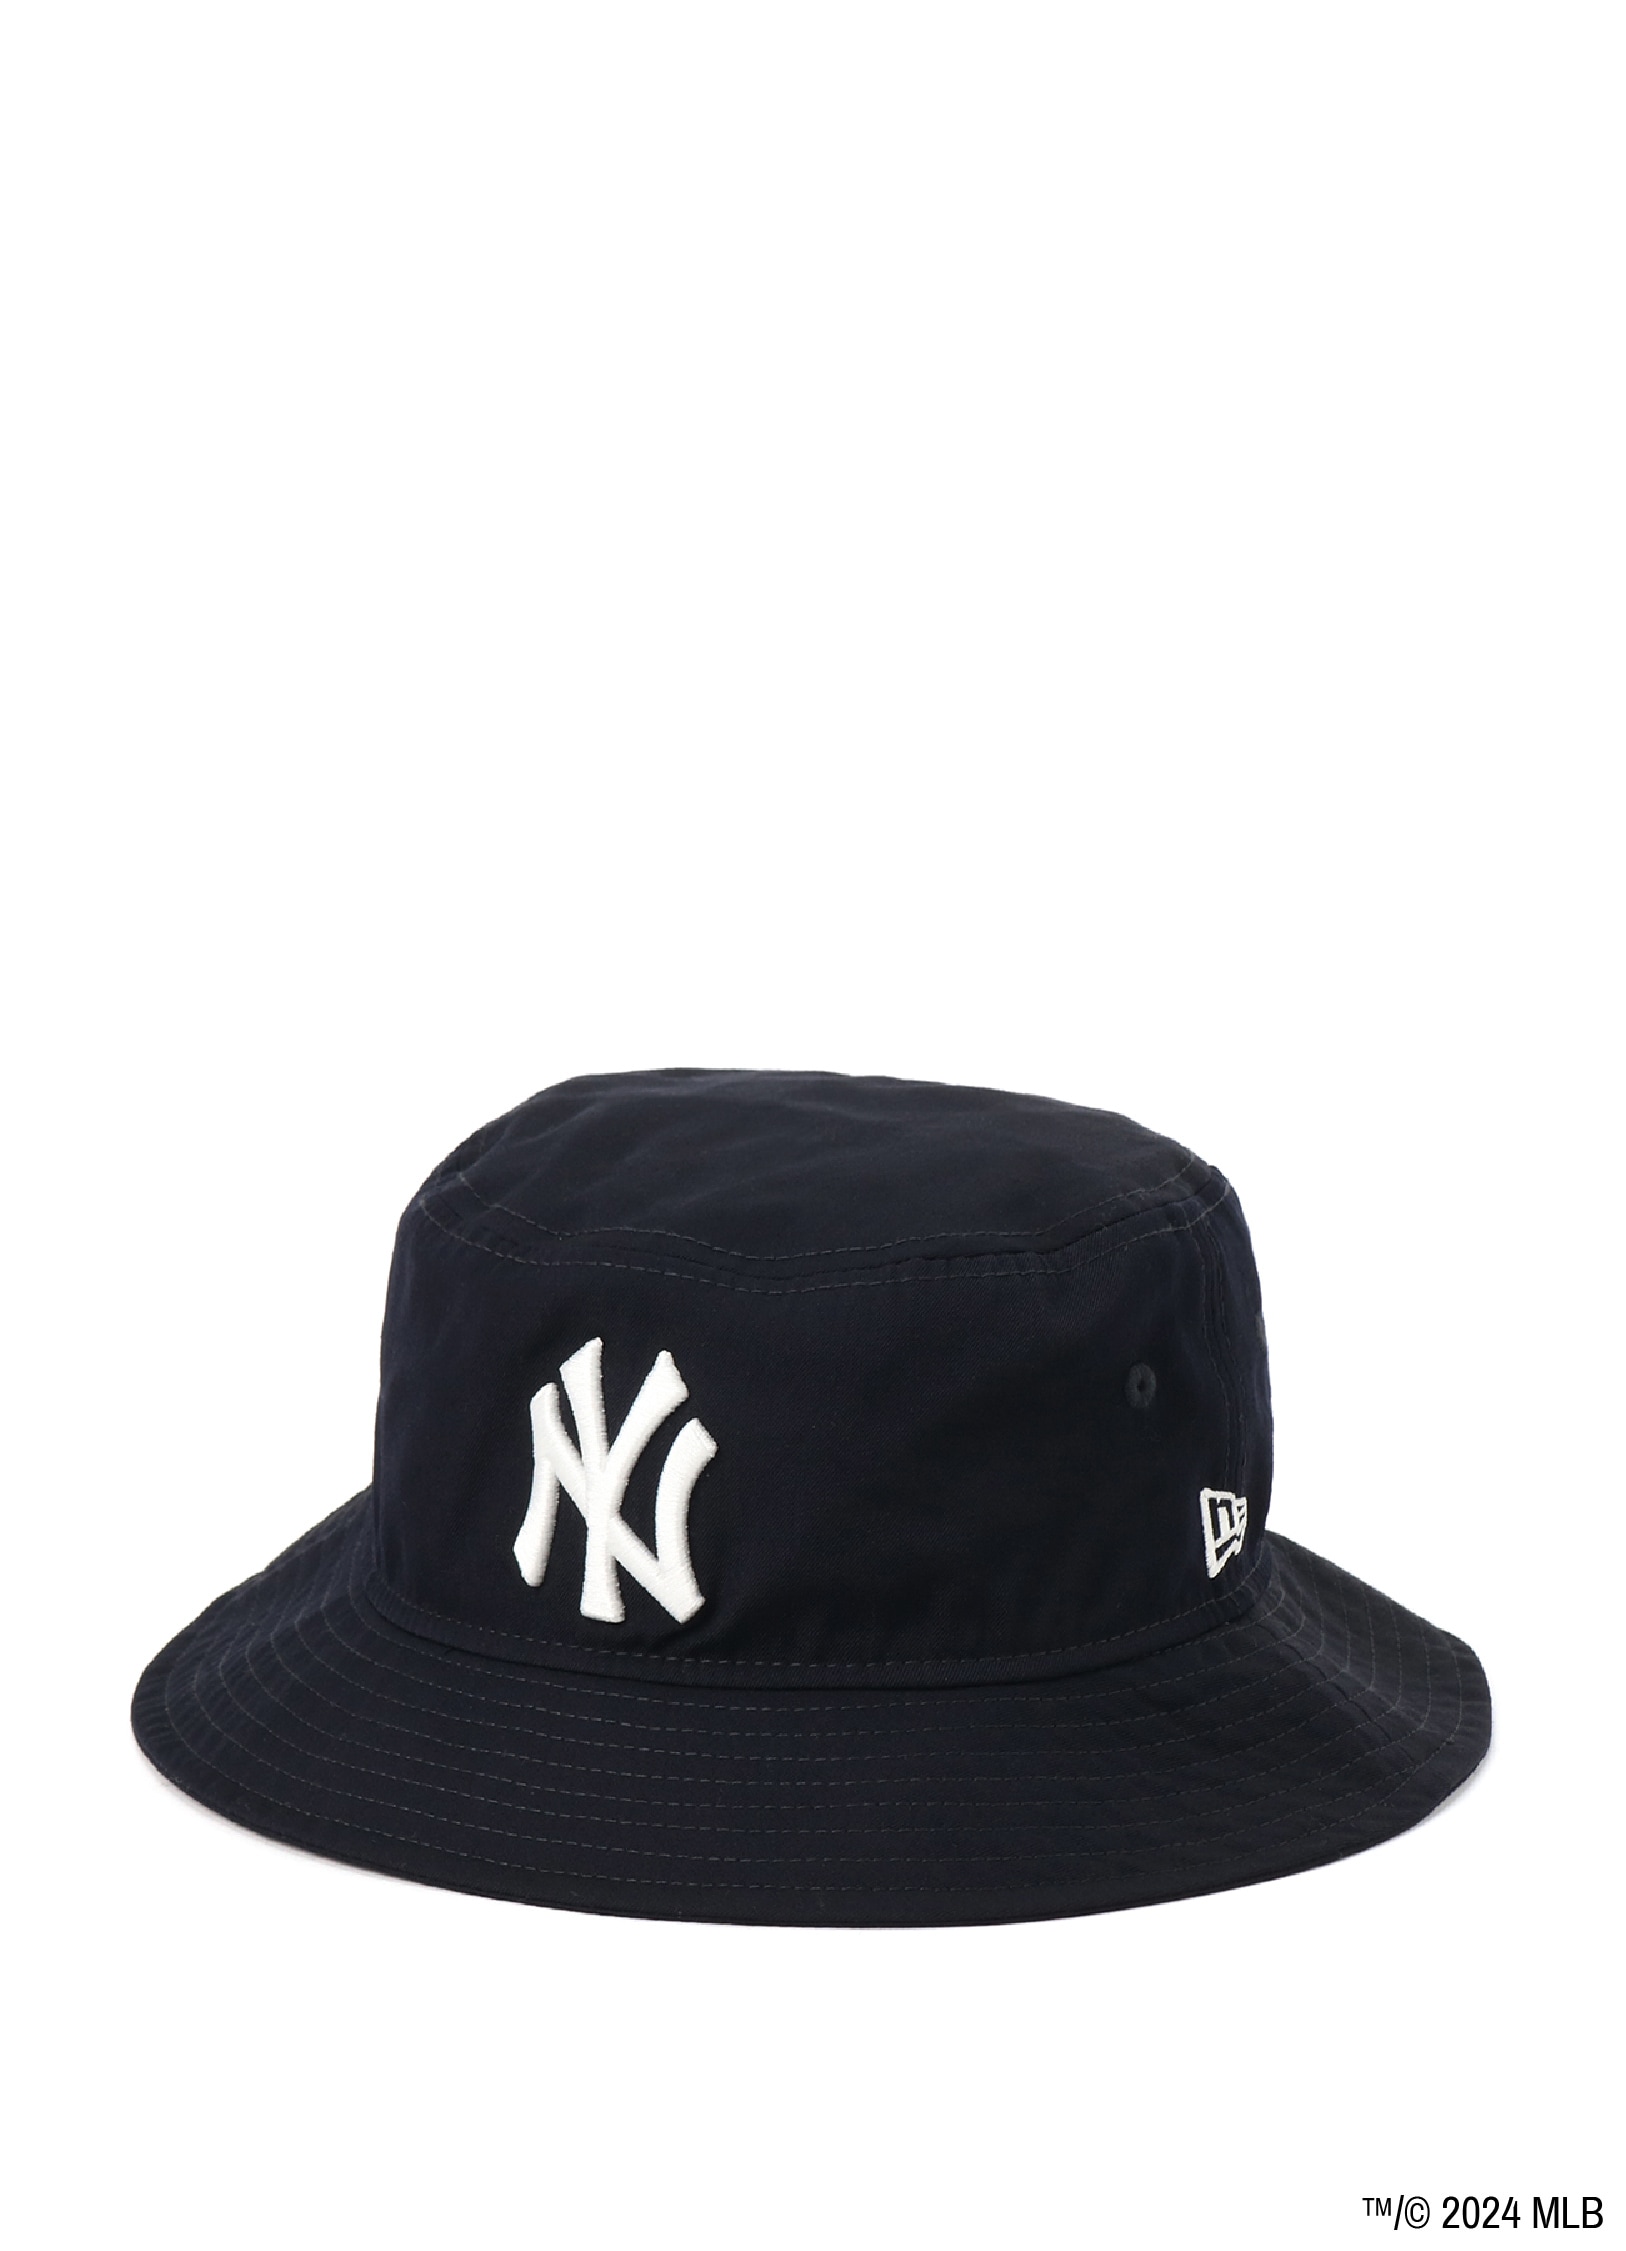 【2/21 12:00 release】WILDSIDE x NEW ERA Bucket-01 New York Yankees Navy GABARDINE HAT